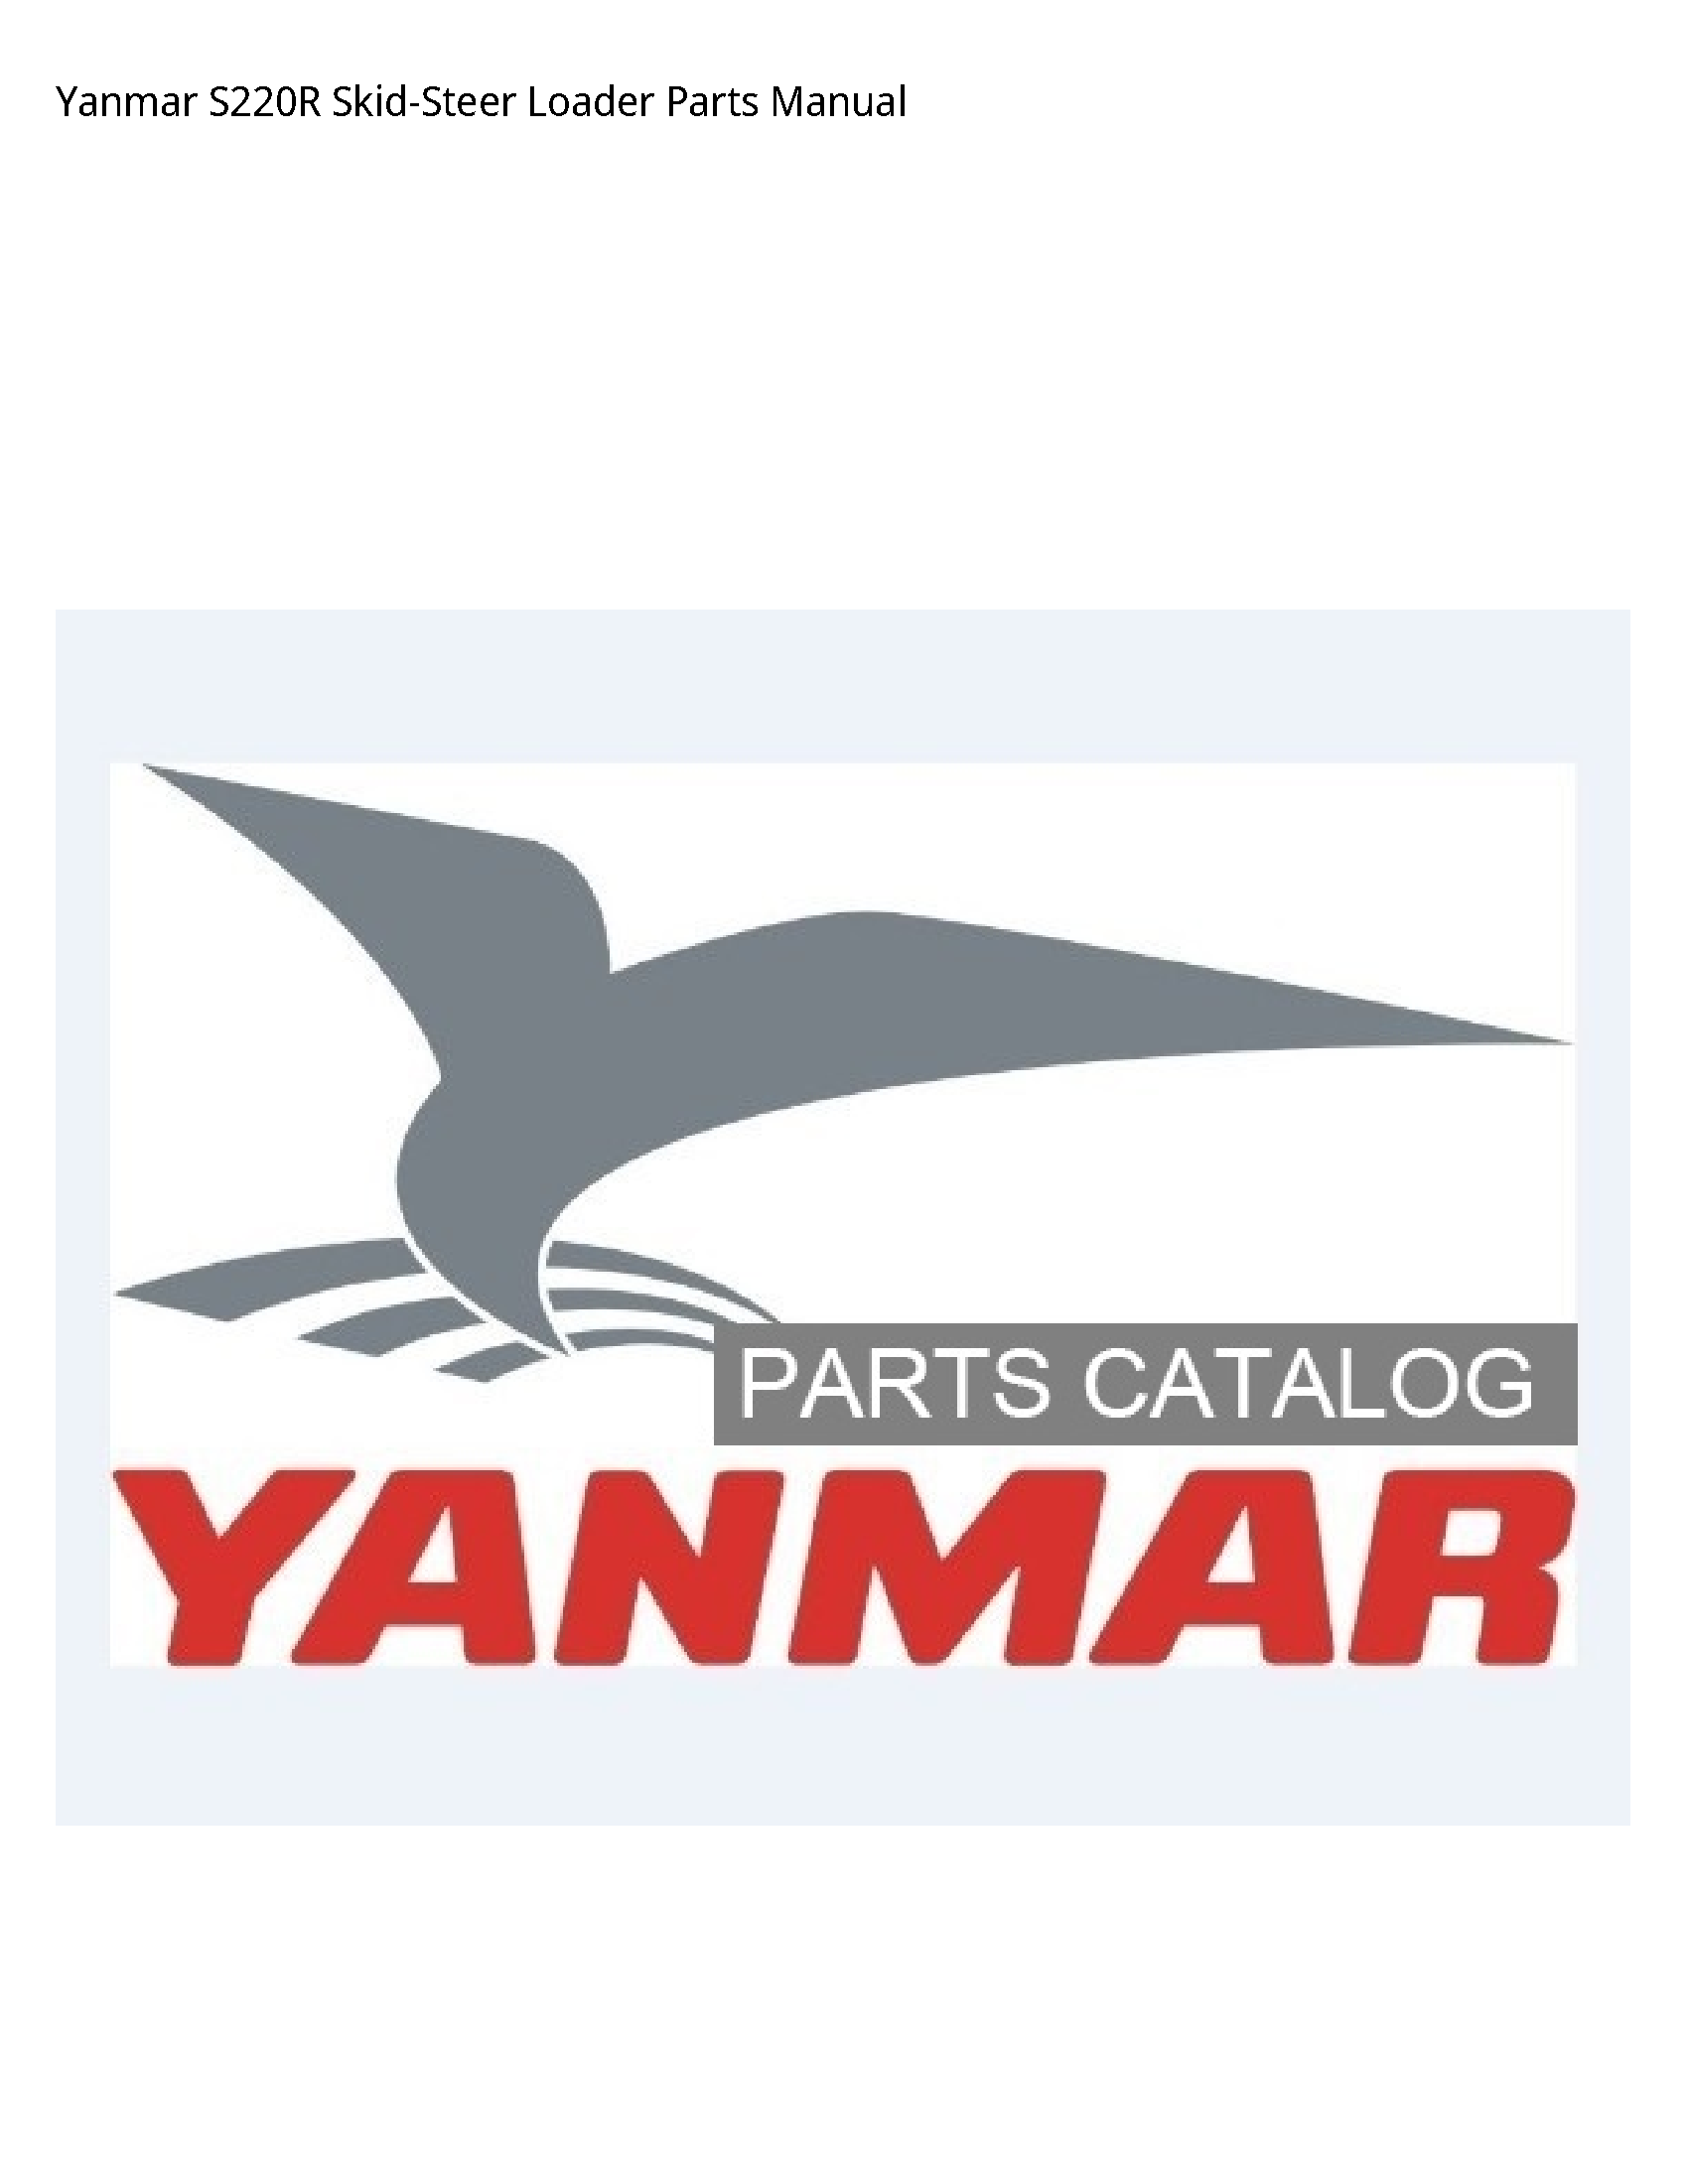 Yanmar S220R Skid-Steer Loader Parts manual